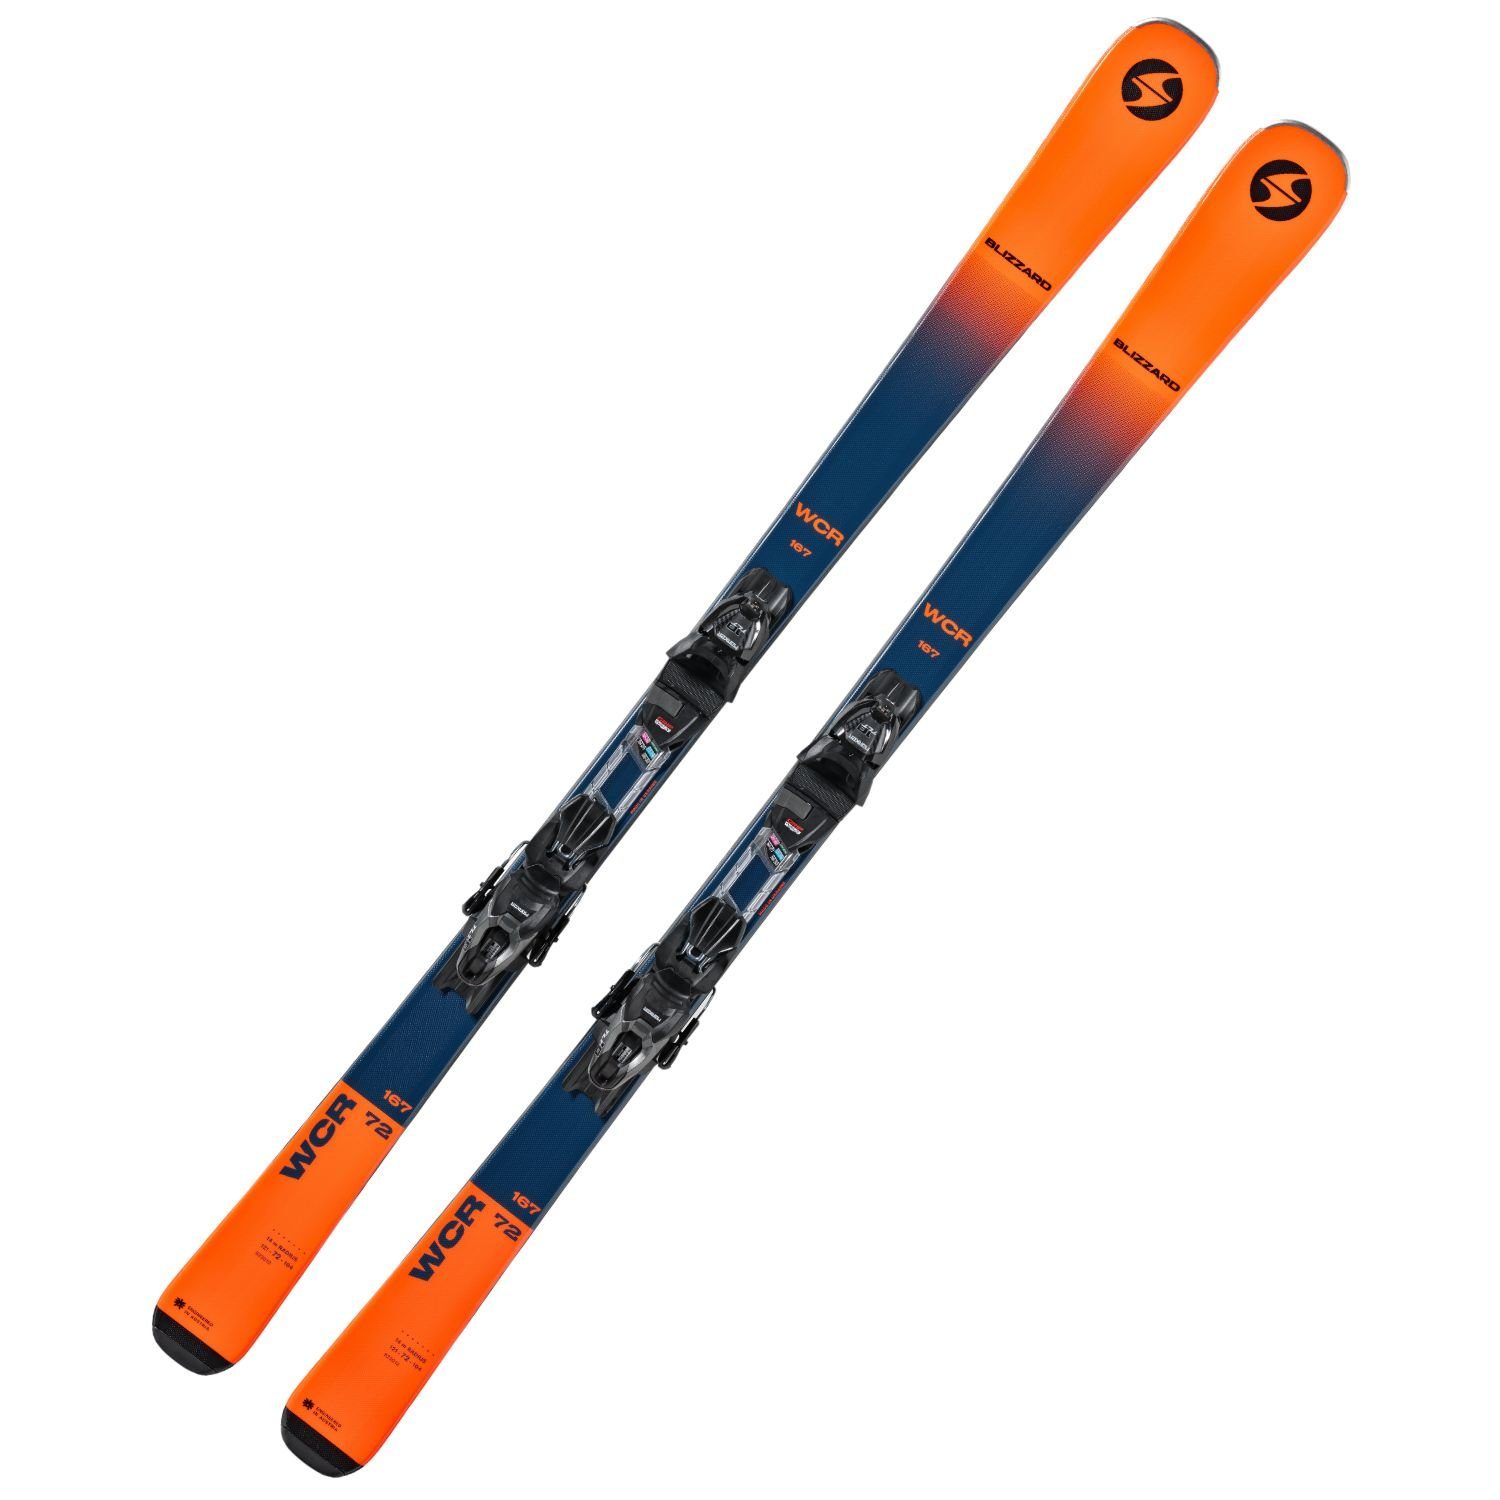 BLIZZARD Ski, orange/blau 10 Bindung WCR Rocker Blizzard Z3-10 Marker + Full TLT Ski Camber